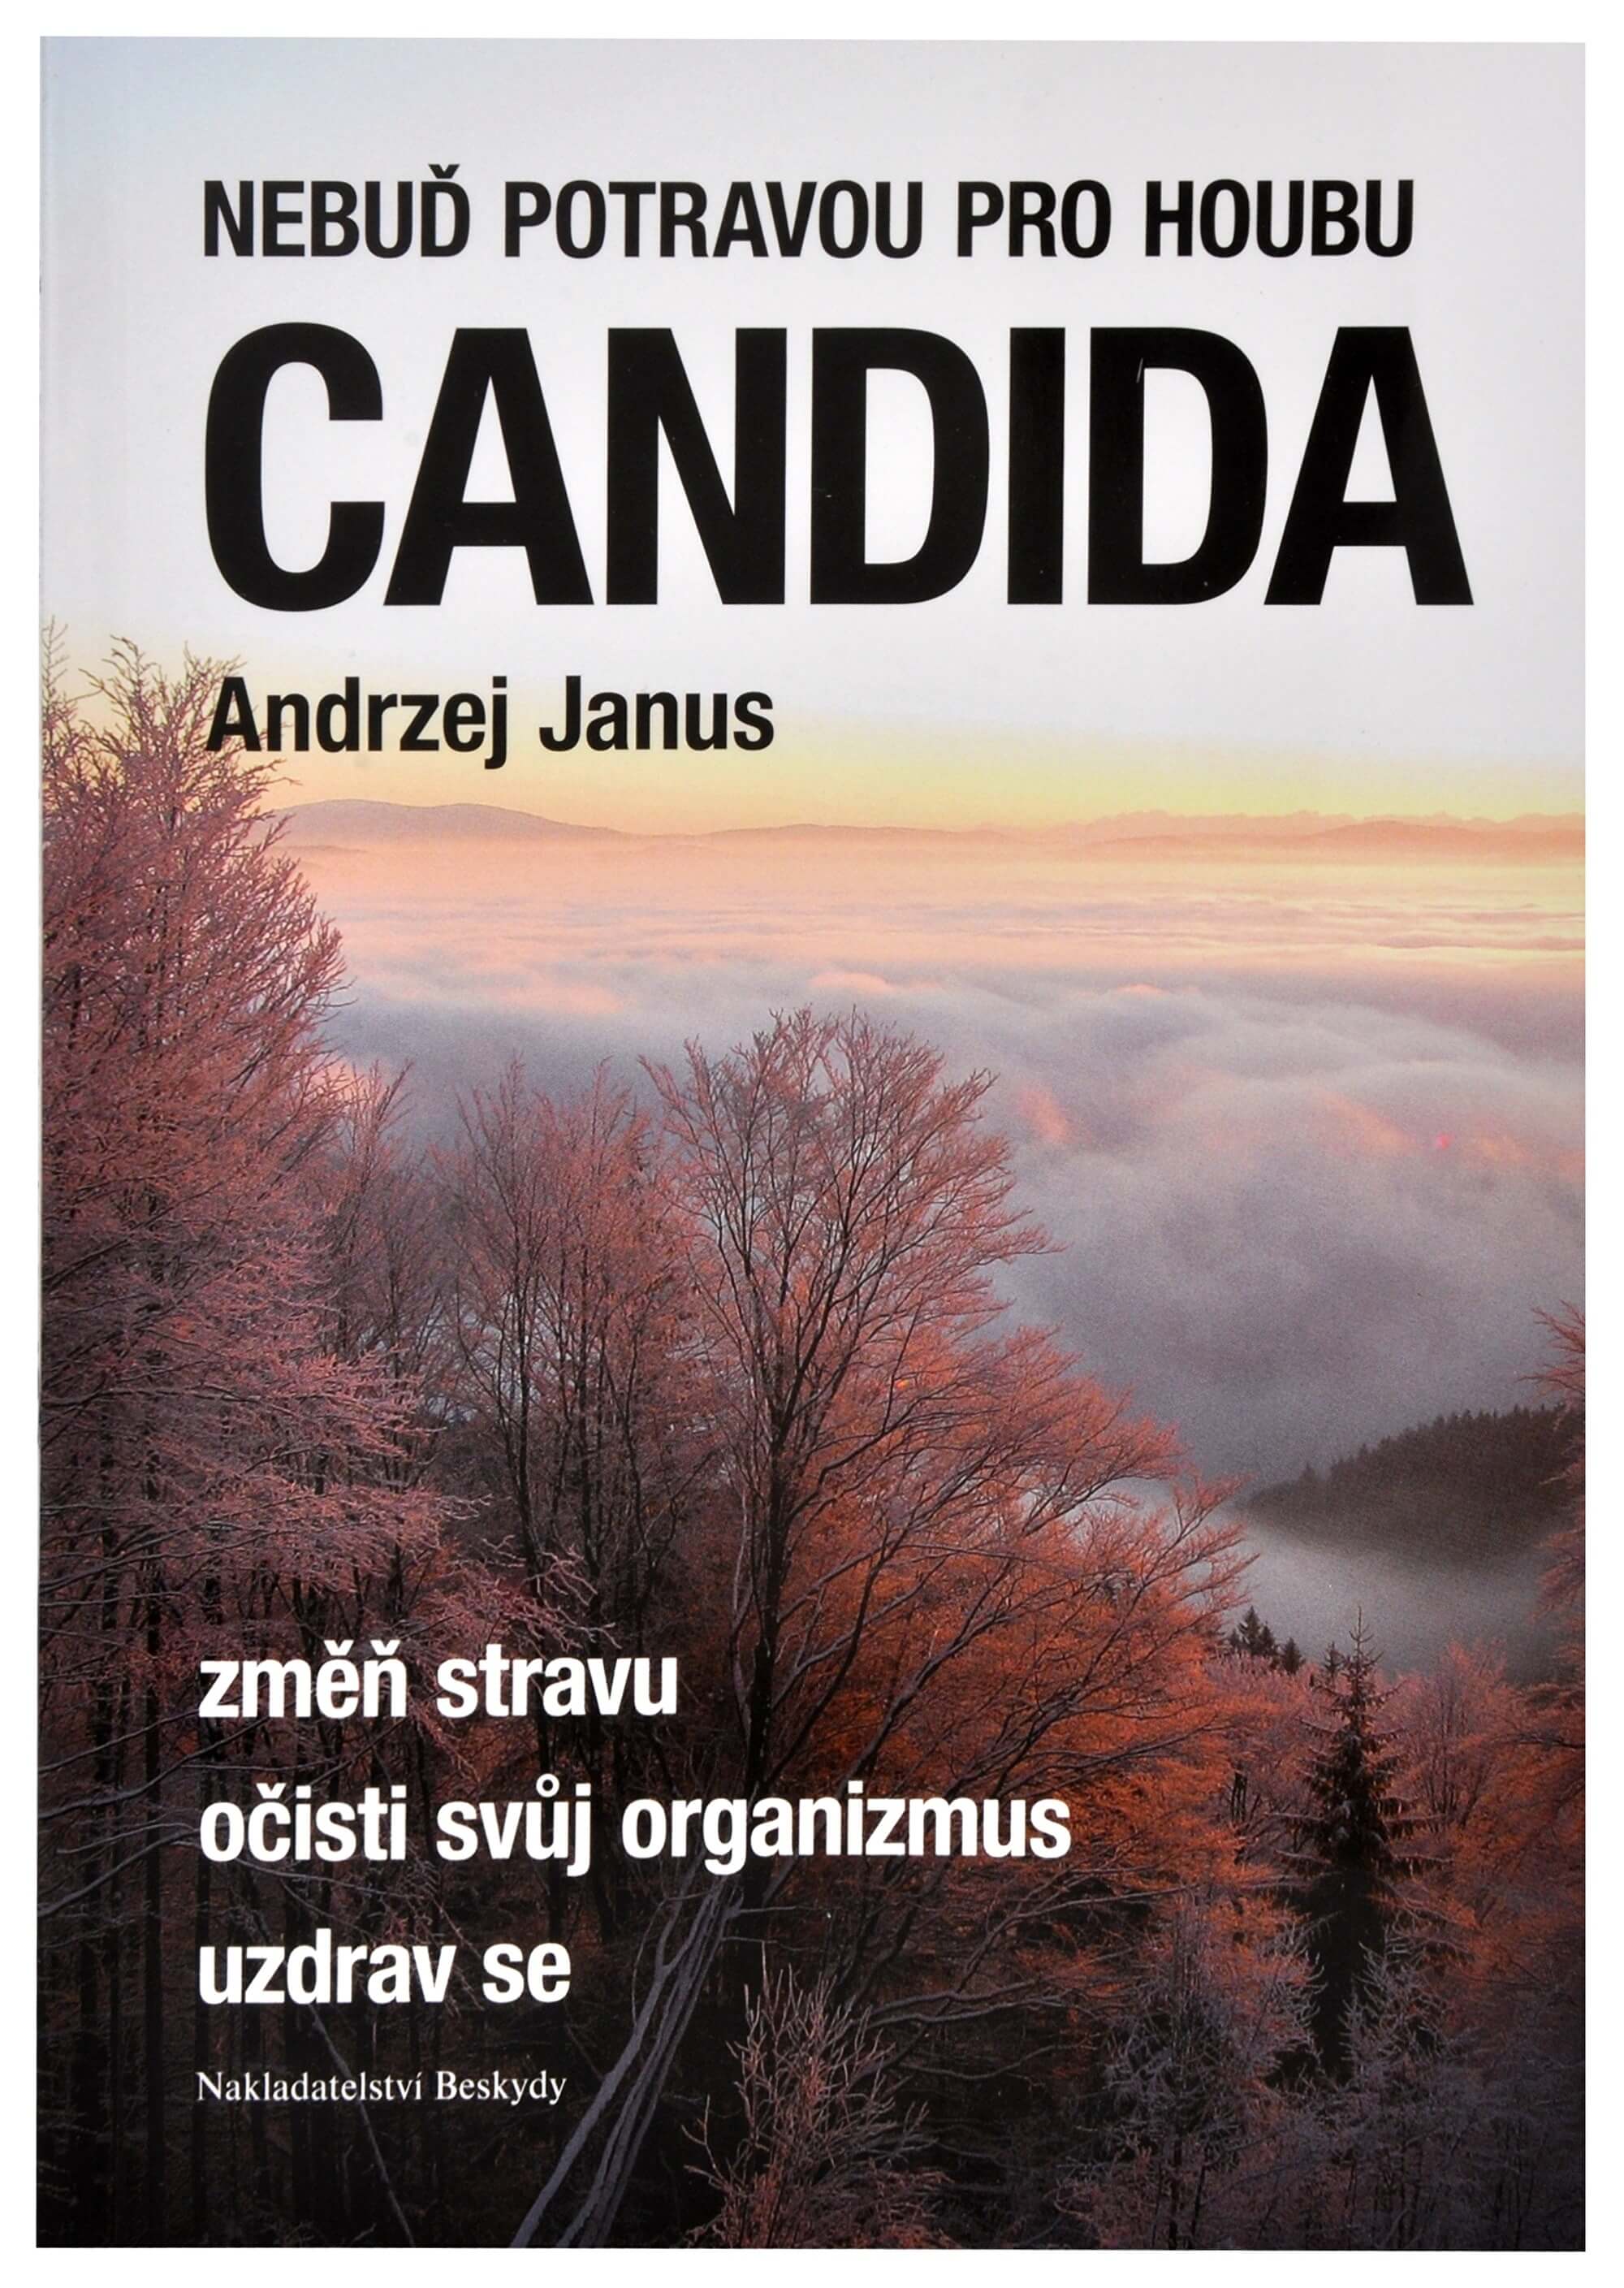 Knihy Nebuď potravou pro houbu Candida (Andrzej Janus) + 2 mesiace na vrátenie tovaru